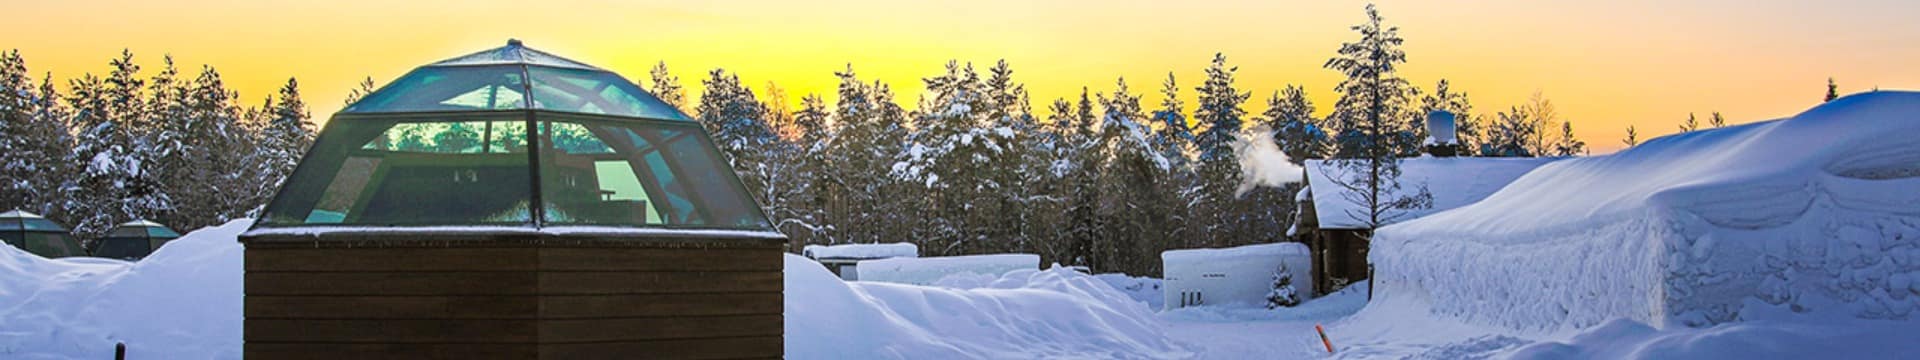 Iglu de gelo (Artic Snow Hotel) - Lapônia, Finlândia.